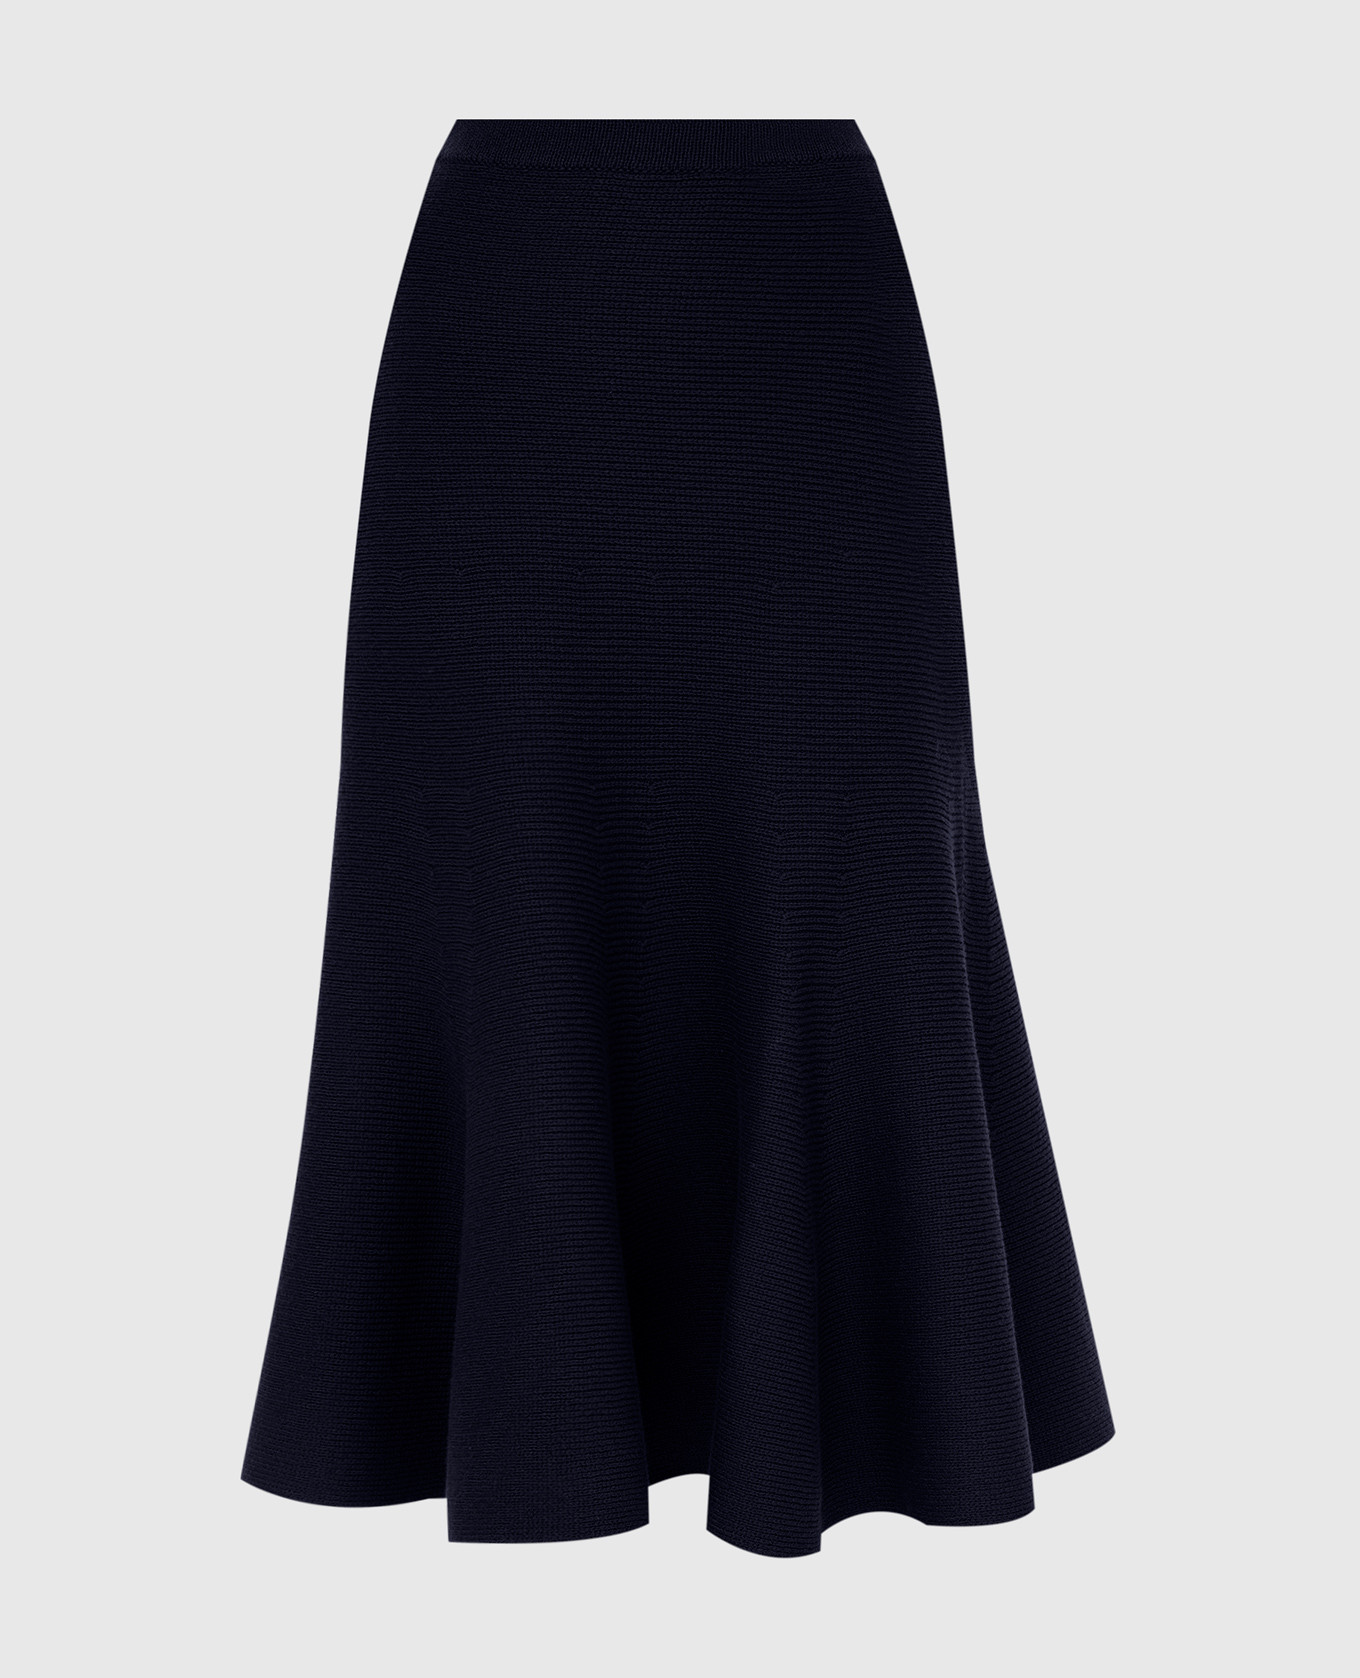 Темно-синяя юбка Olive из шерсти мериноса